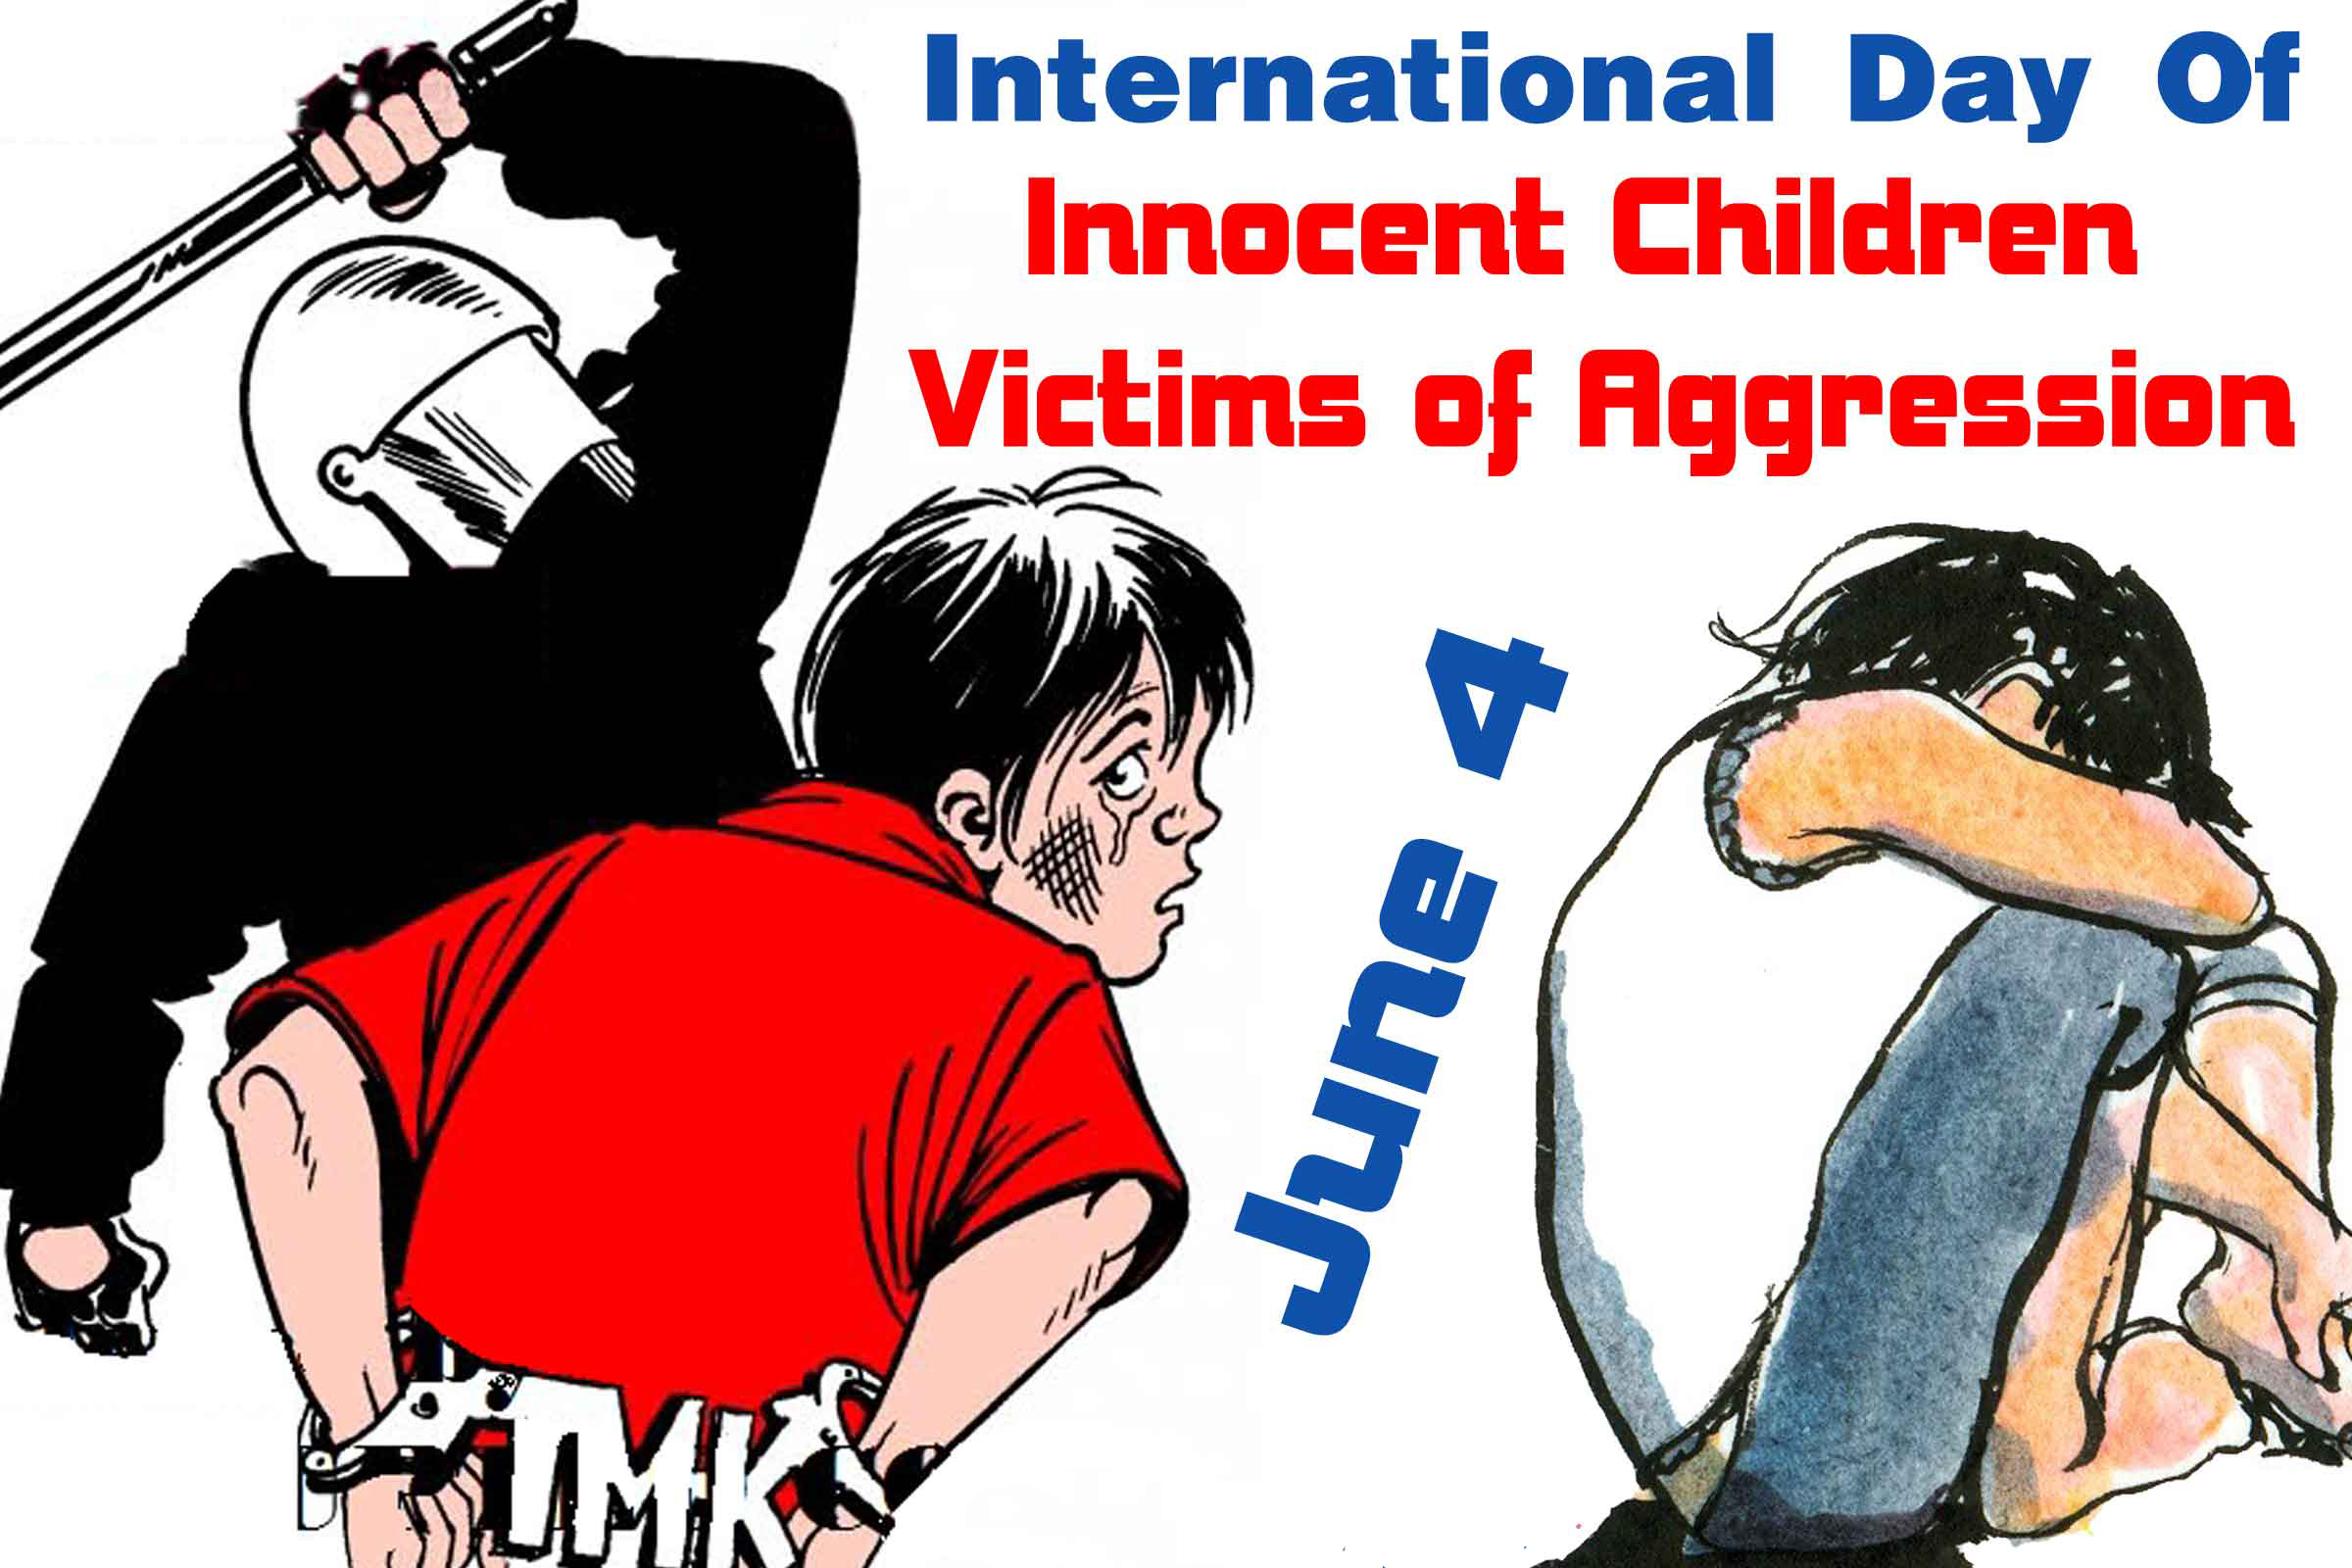 https://specialforworld.files.wordpress.com/2012/06/innocent-children-victims-1.jpg